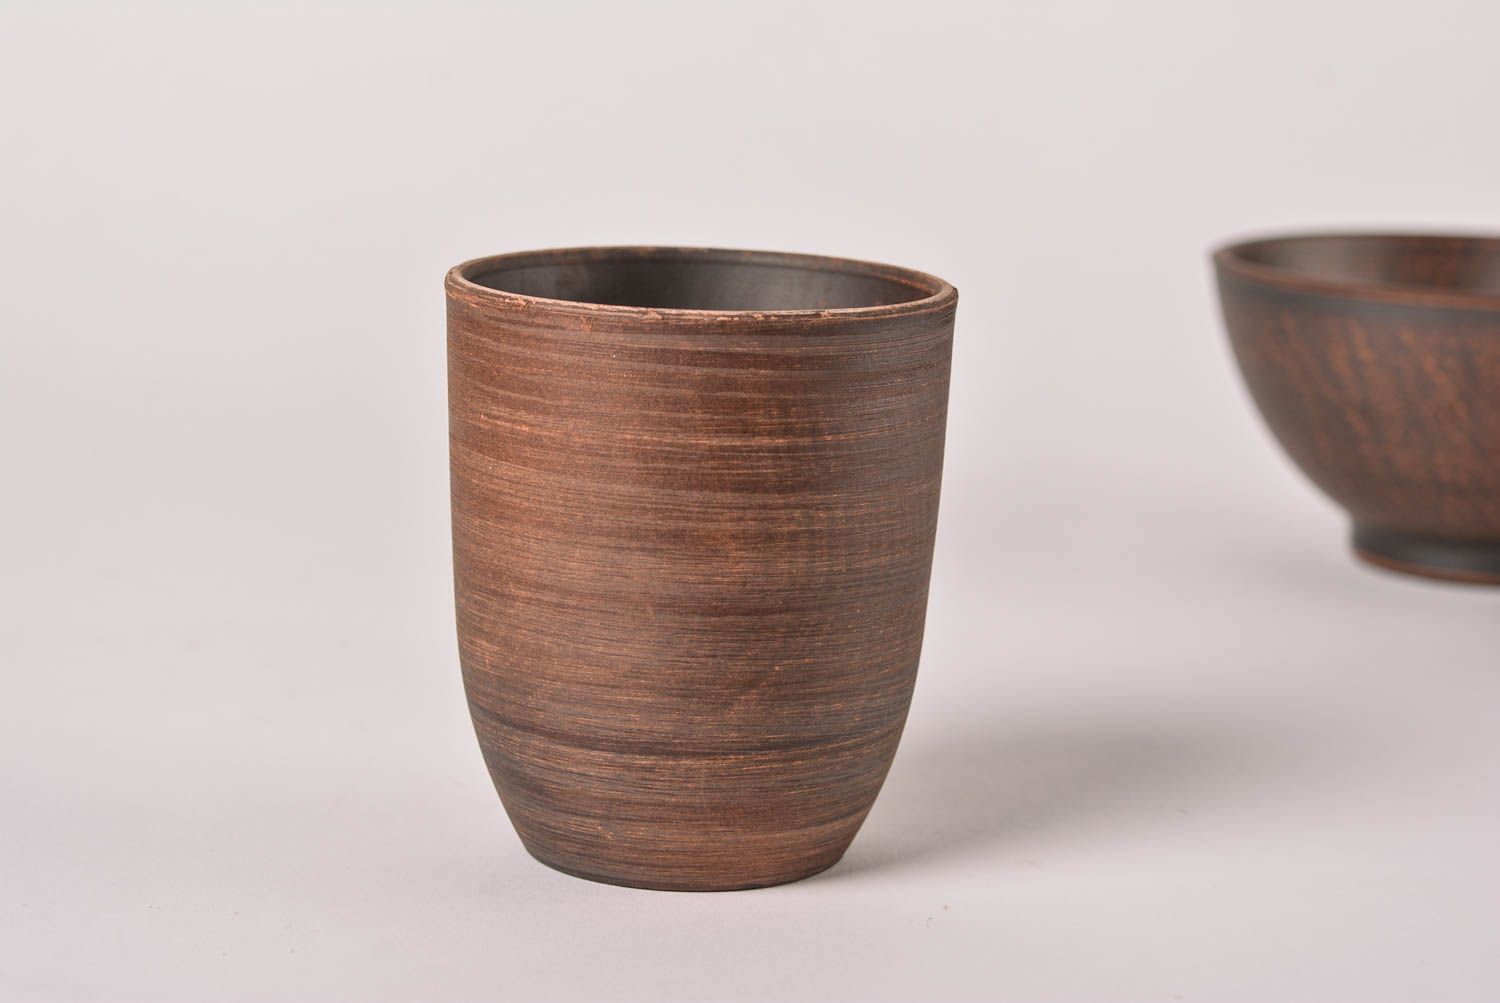 Beautiful handmade ceramic glass kitchen supplies pottery works gift ideas photo 1